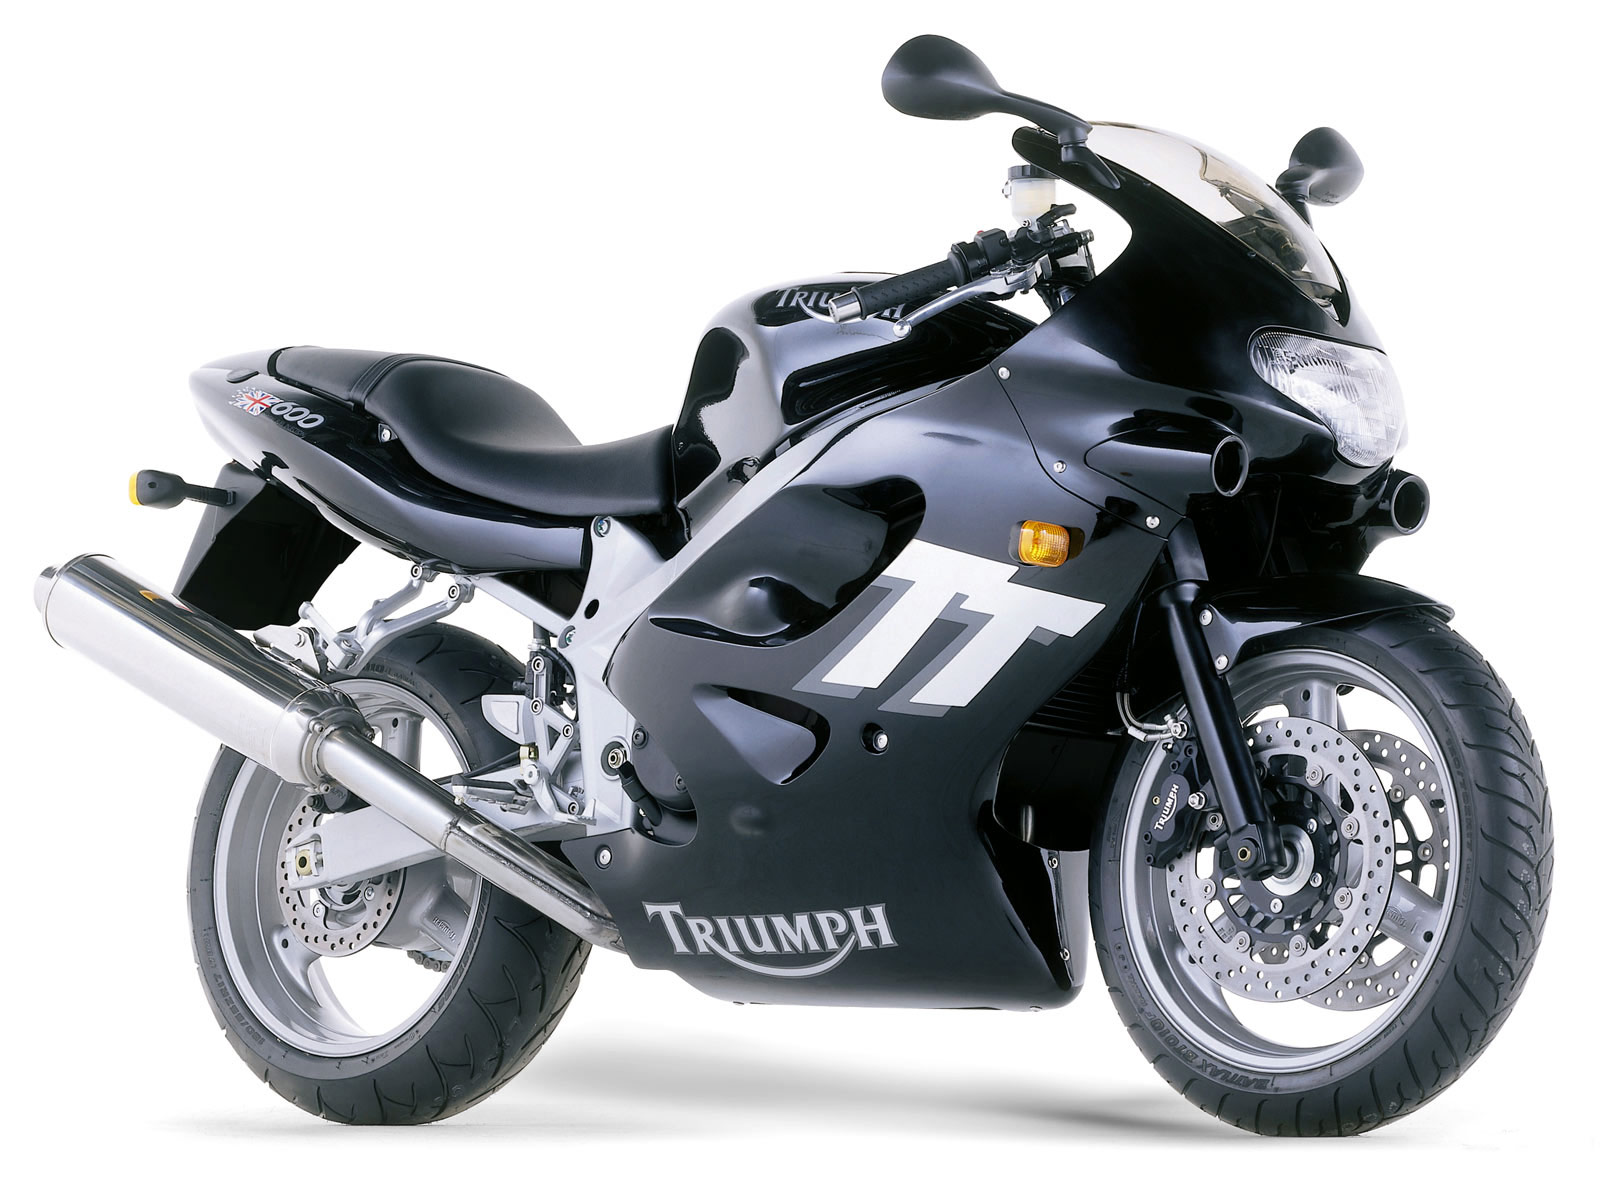 Triumph TT 600 2002 photo - 1